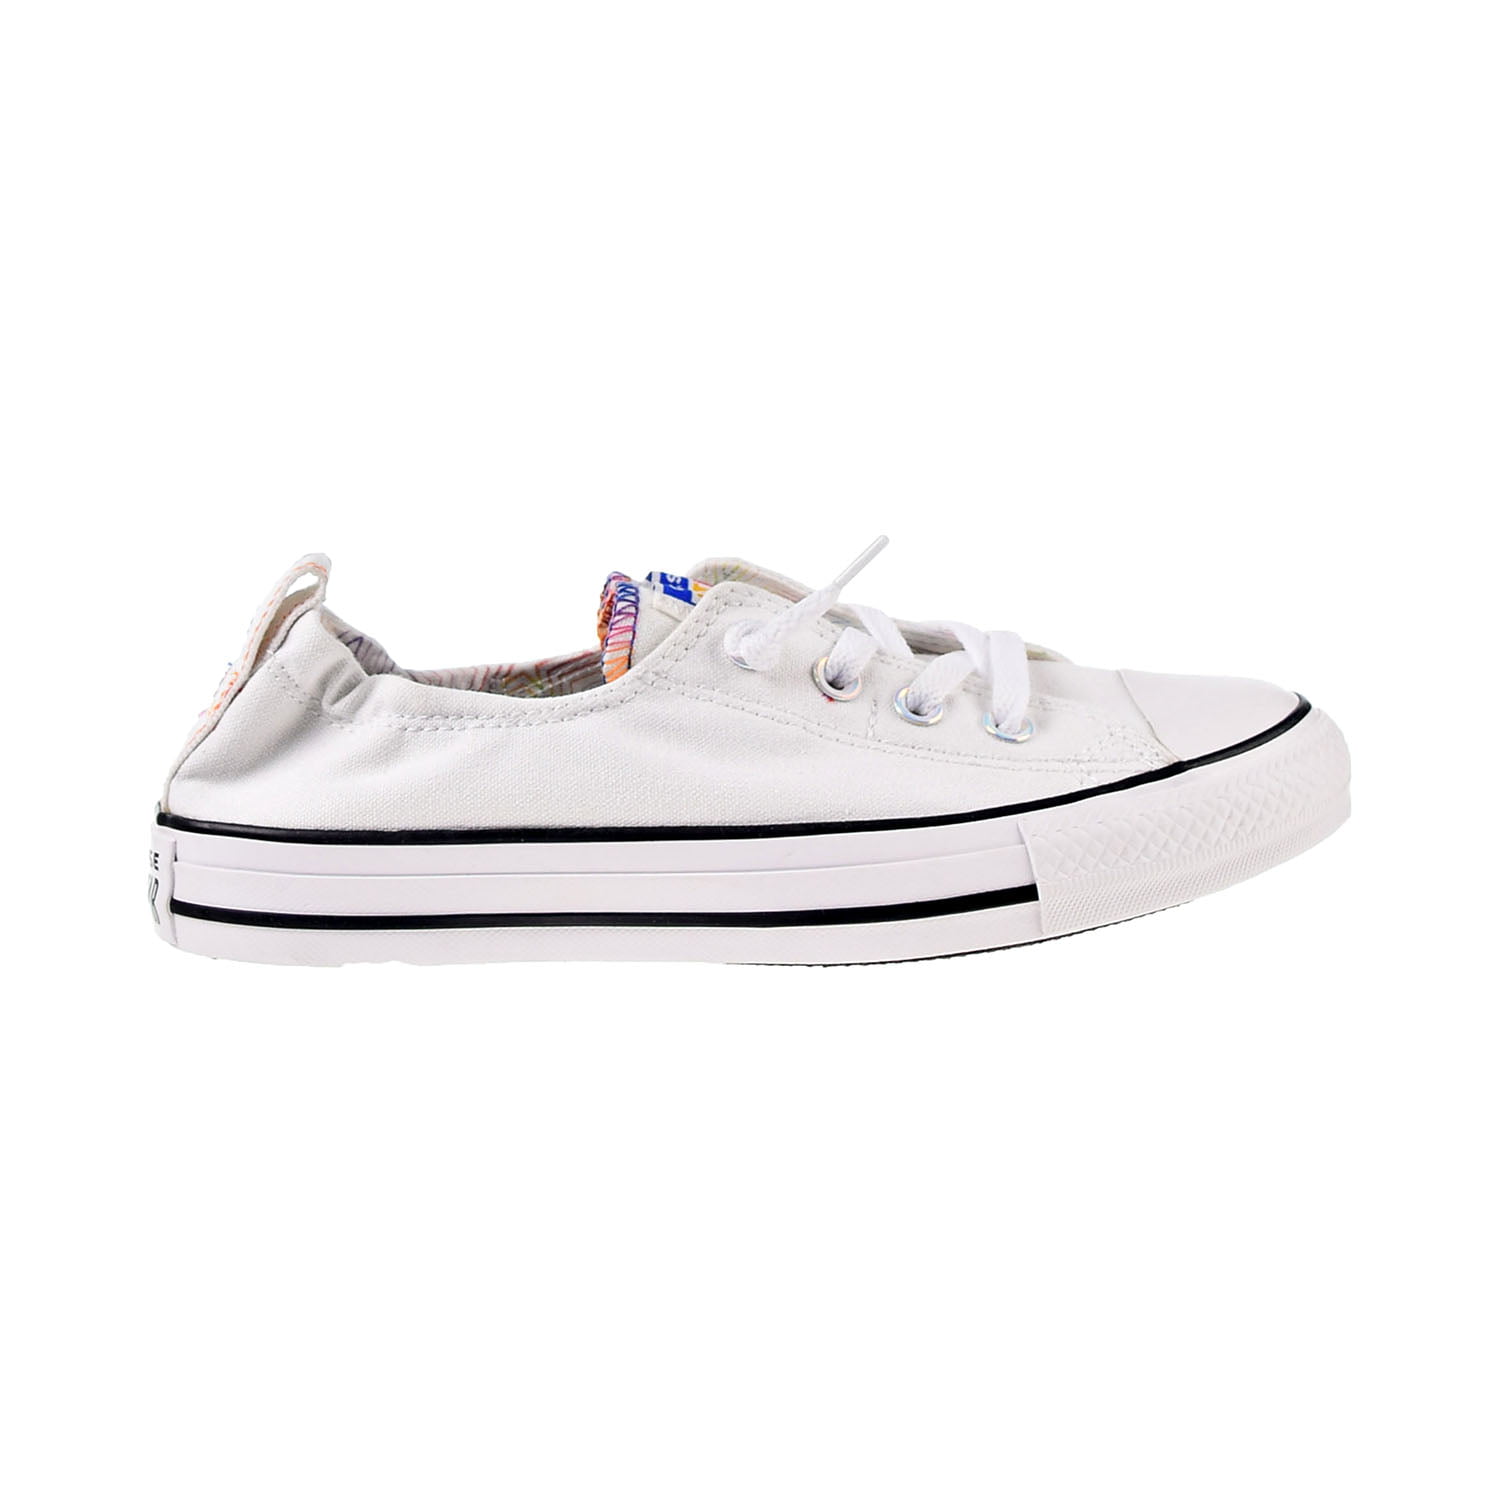 Converse Chuck Taylor All Star Shoreline Slip-On Women's Shoes White-Black  565441f 